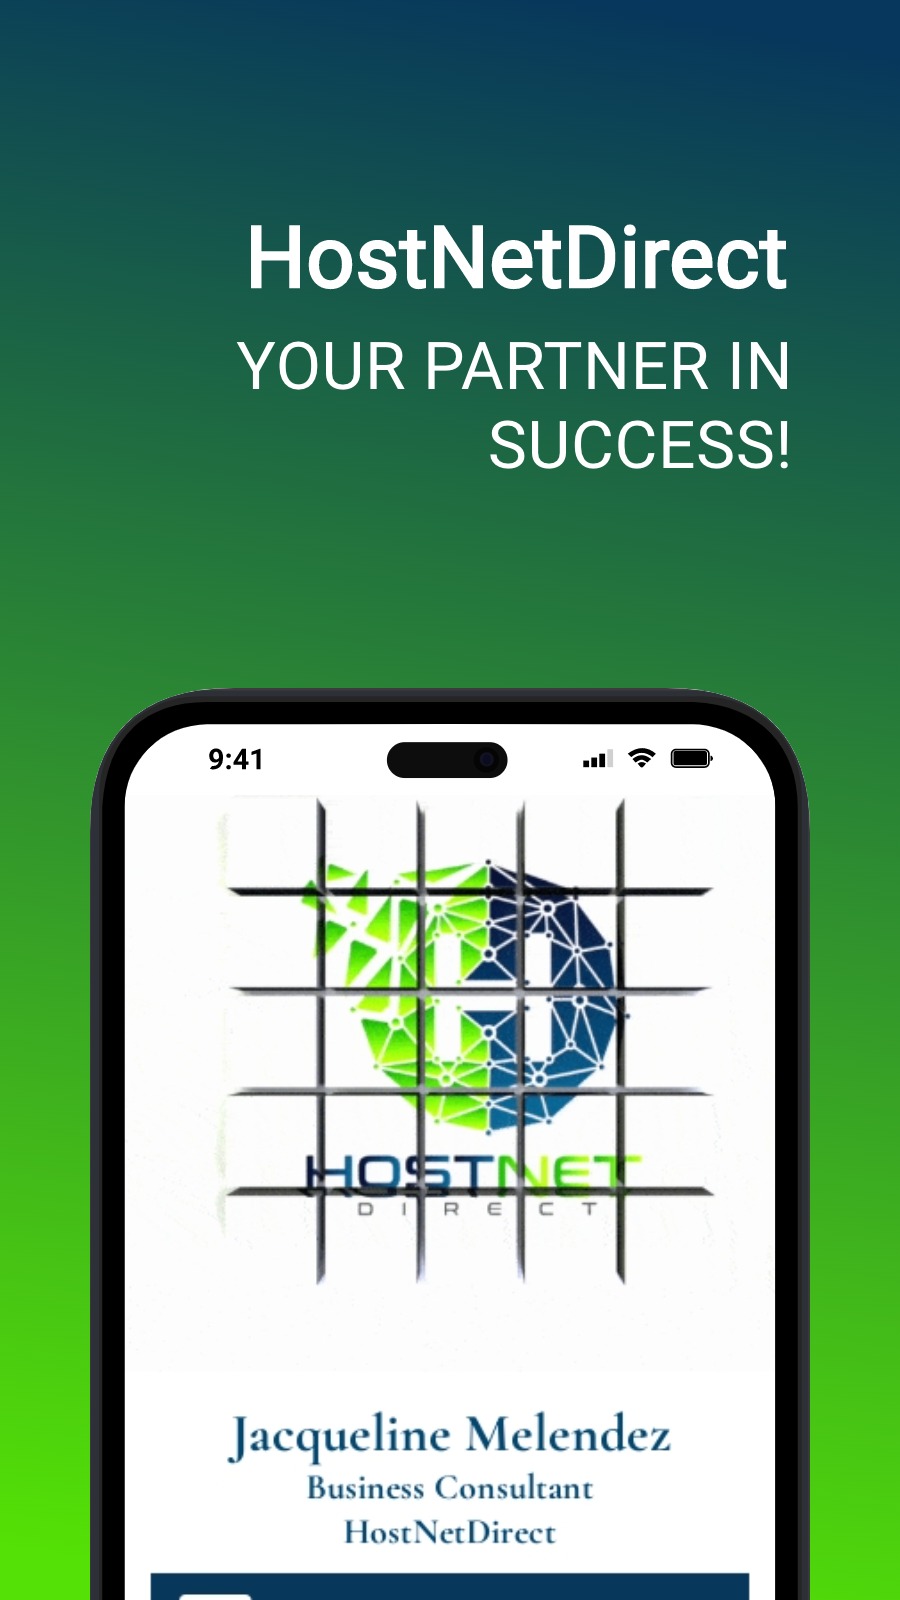 HostNetDirect - YOUR PARTNER IN SUCCESS!